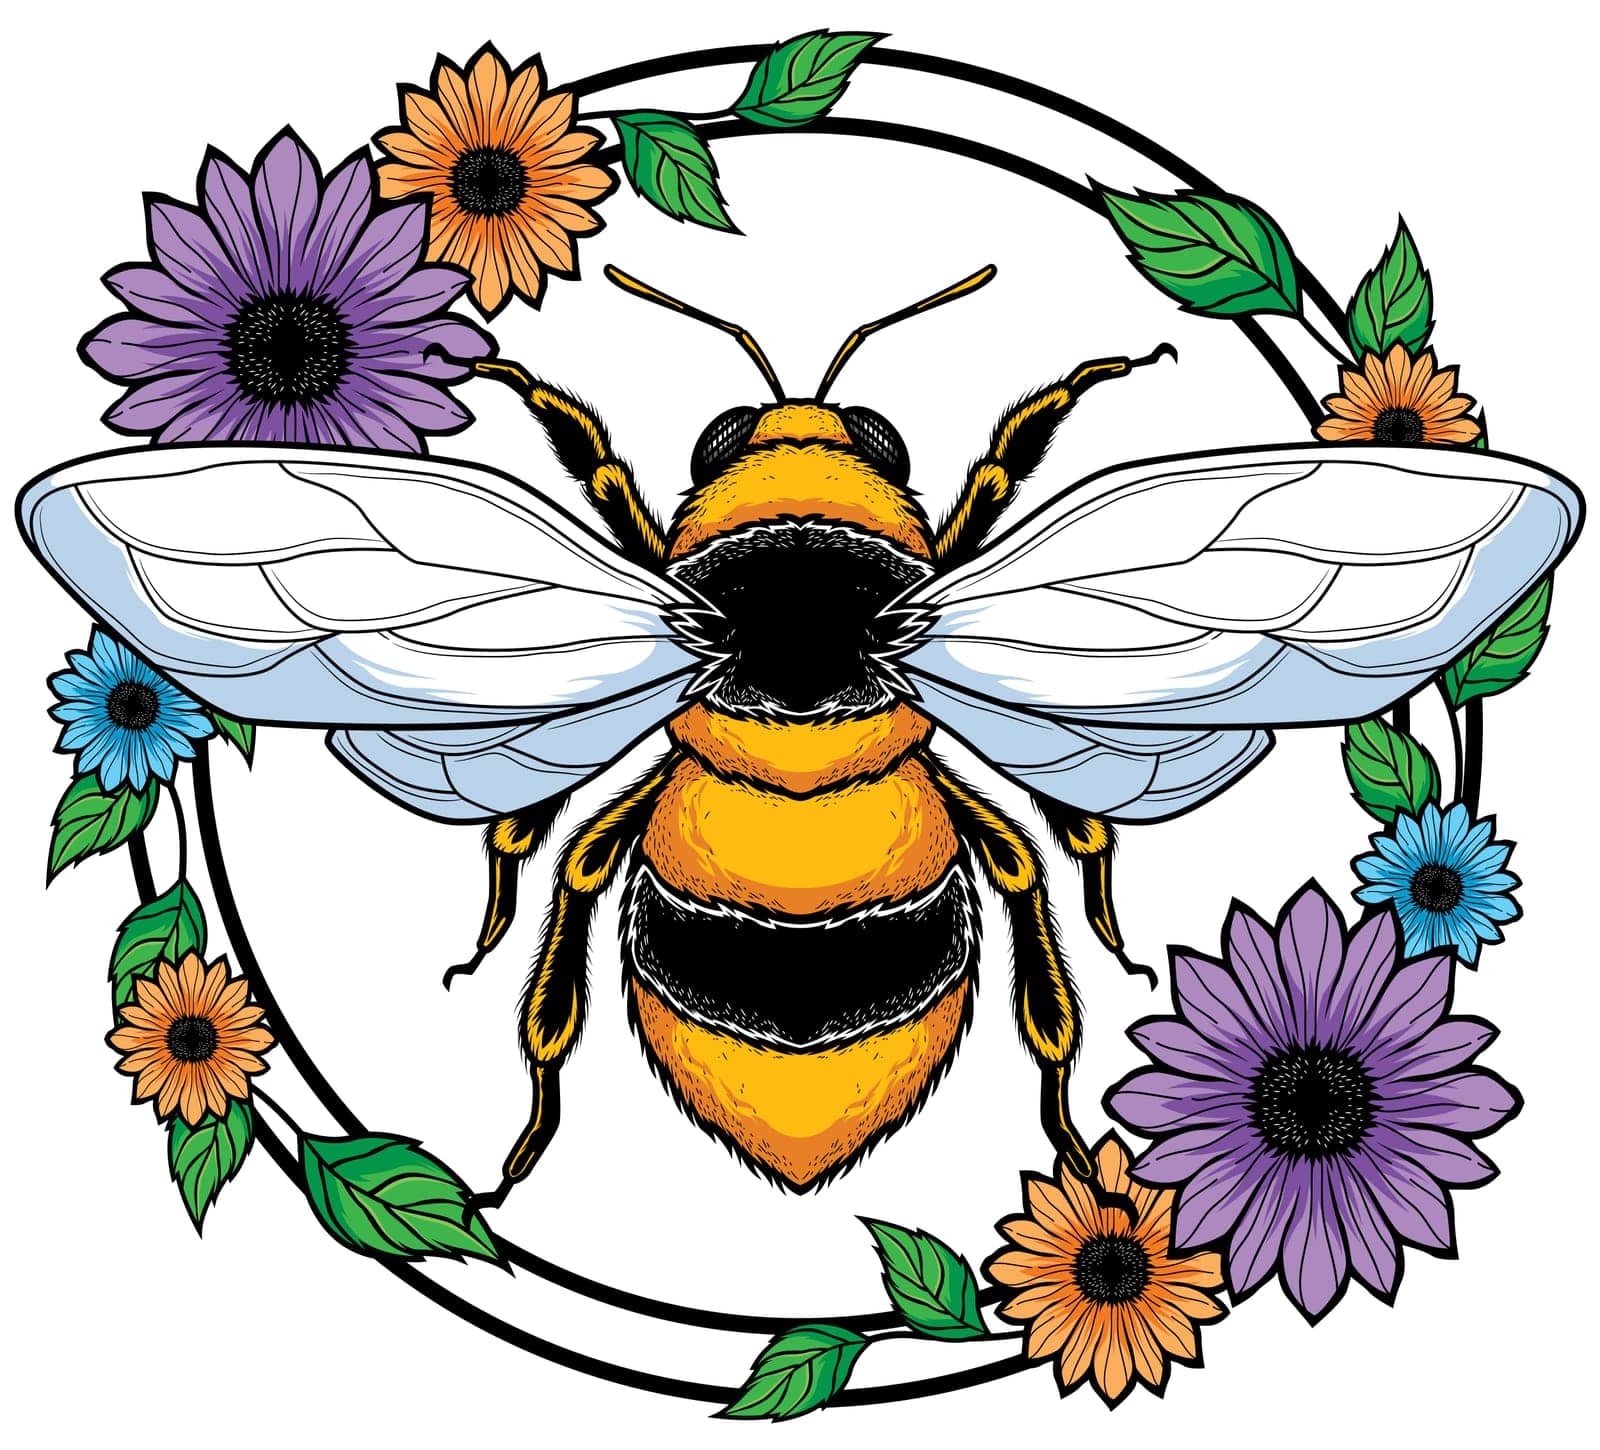 Bee Mascot by Malchev